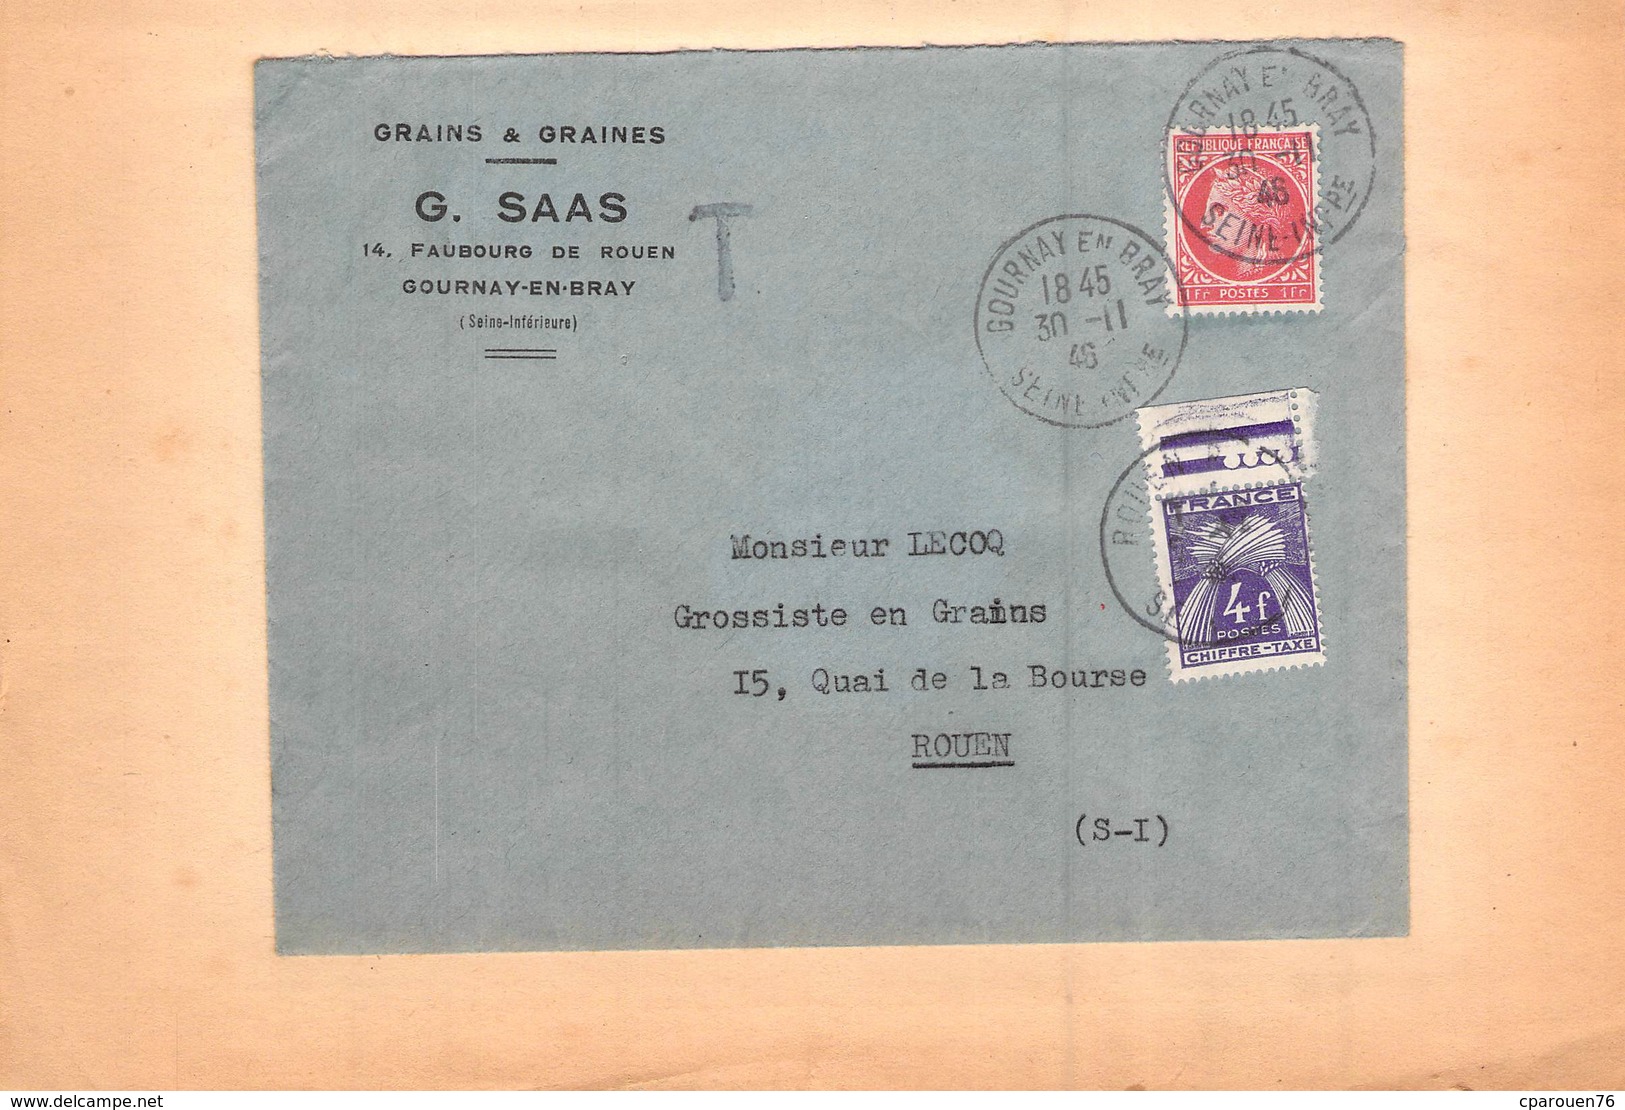 Enveloppe Publicitaire GRAINS GRAINES G SAAS 14 FBG DE ROUEN GOURNAY EN BRAY SEINE MARITIME TIMBRE 1946 TAXE 4 F TIMBRES - Alimentaire